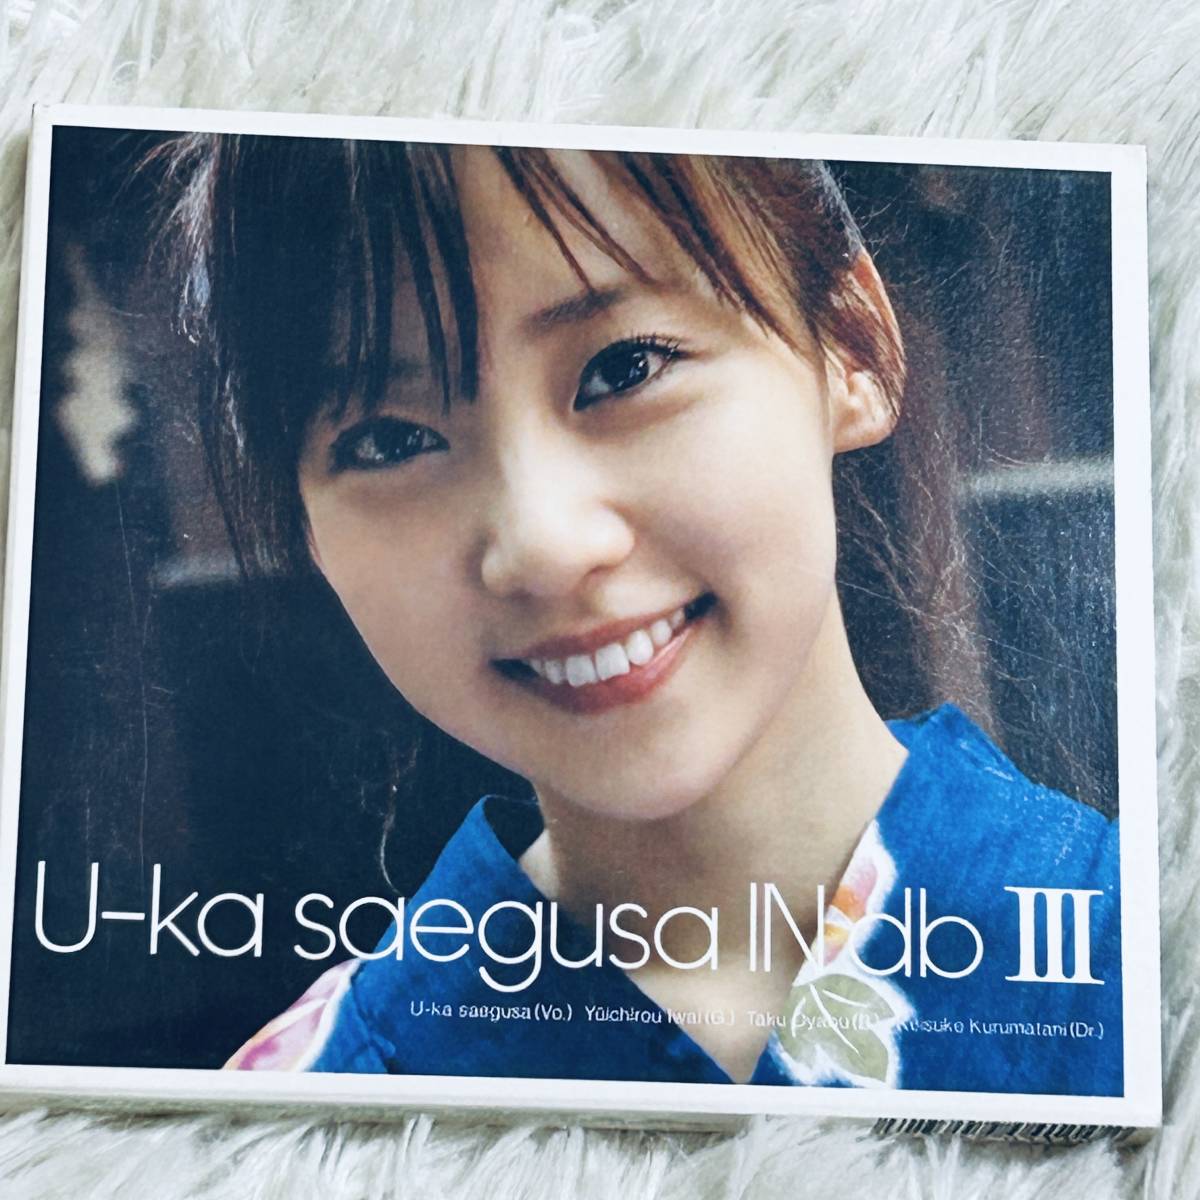 (CD) 三枝夕夏 (さえぐさ ゆうか) IN db / U-ka saegusa IN db III(限定盤) (管理番号R(83)5-2)_画像1